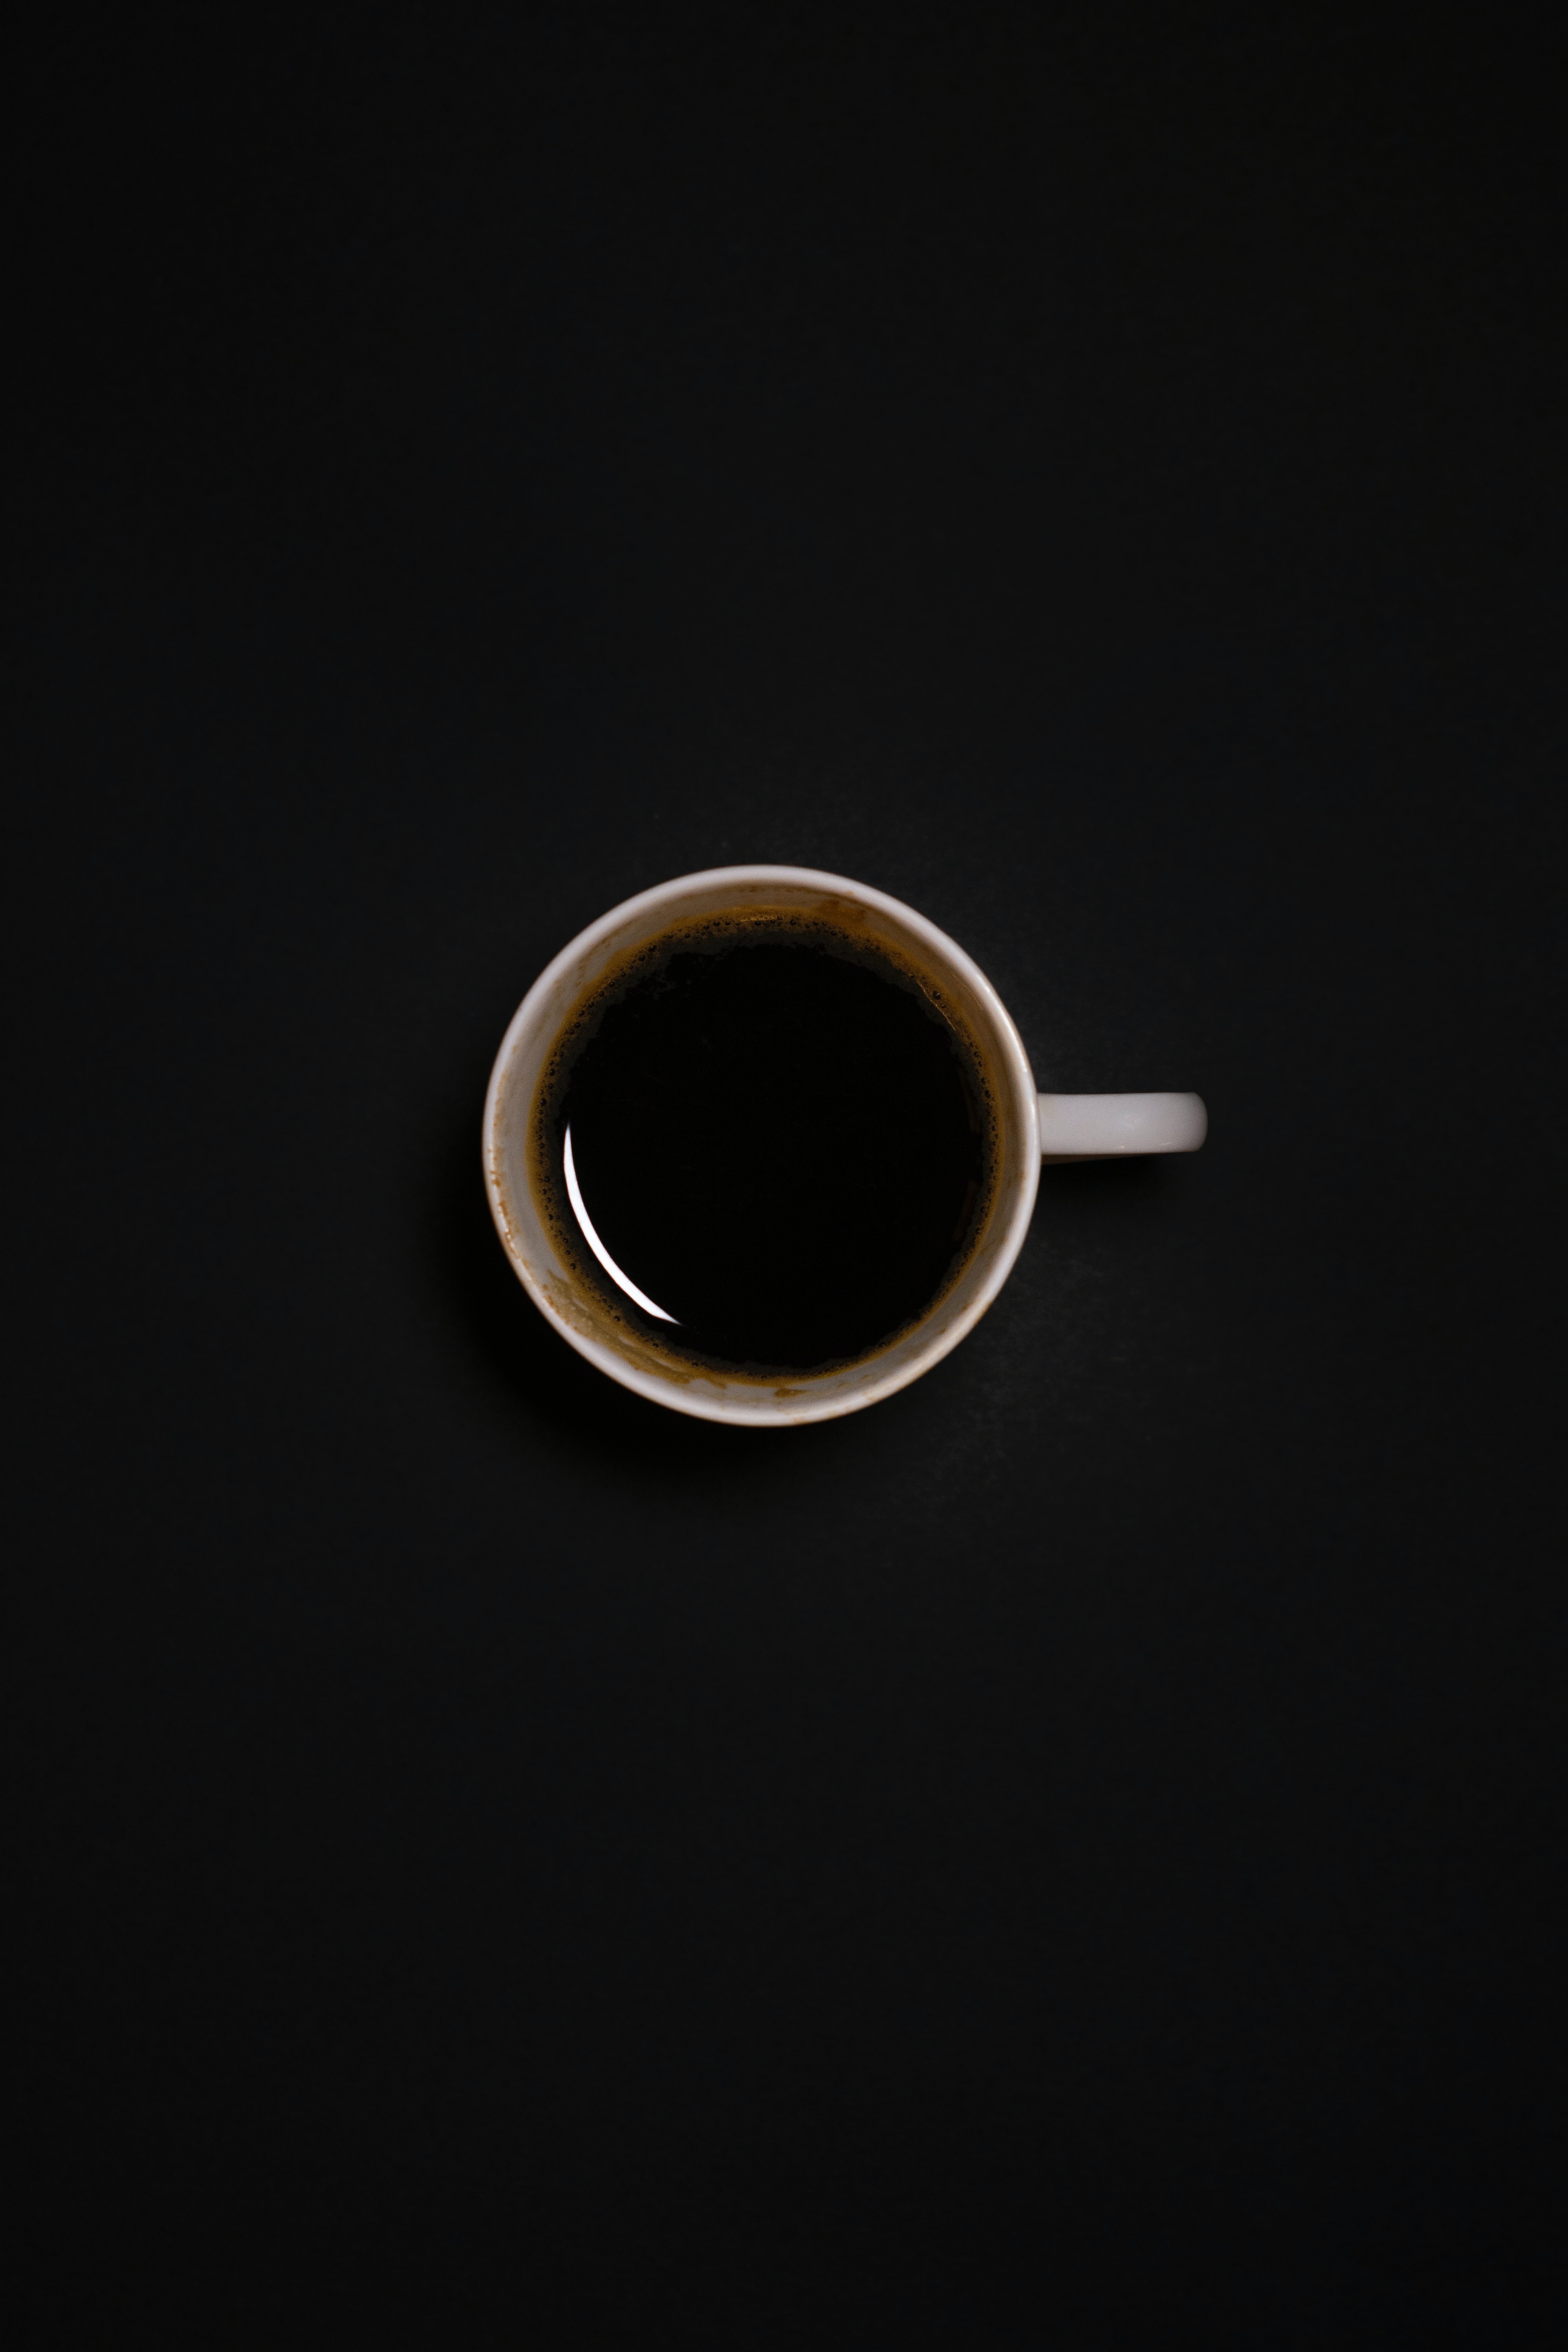 coffee, black, dark, cup